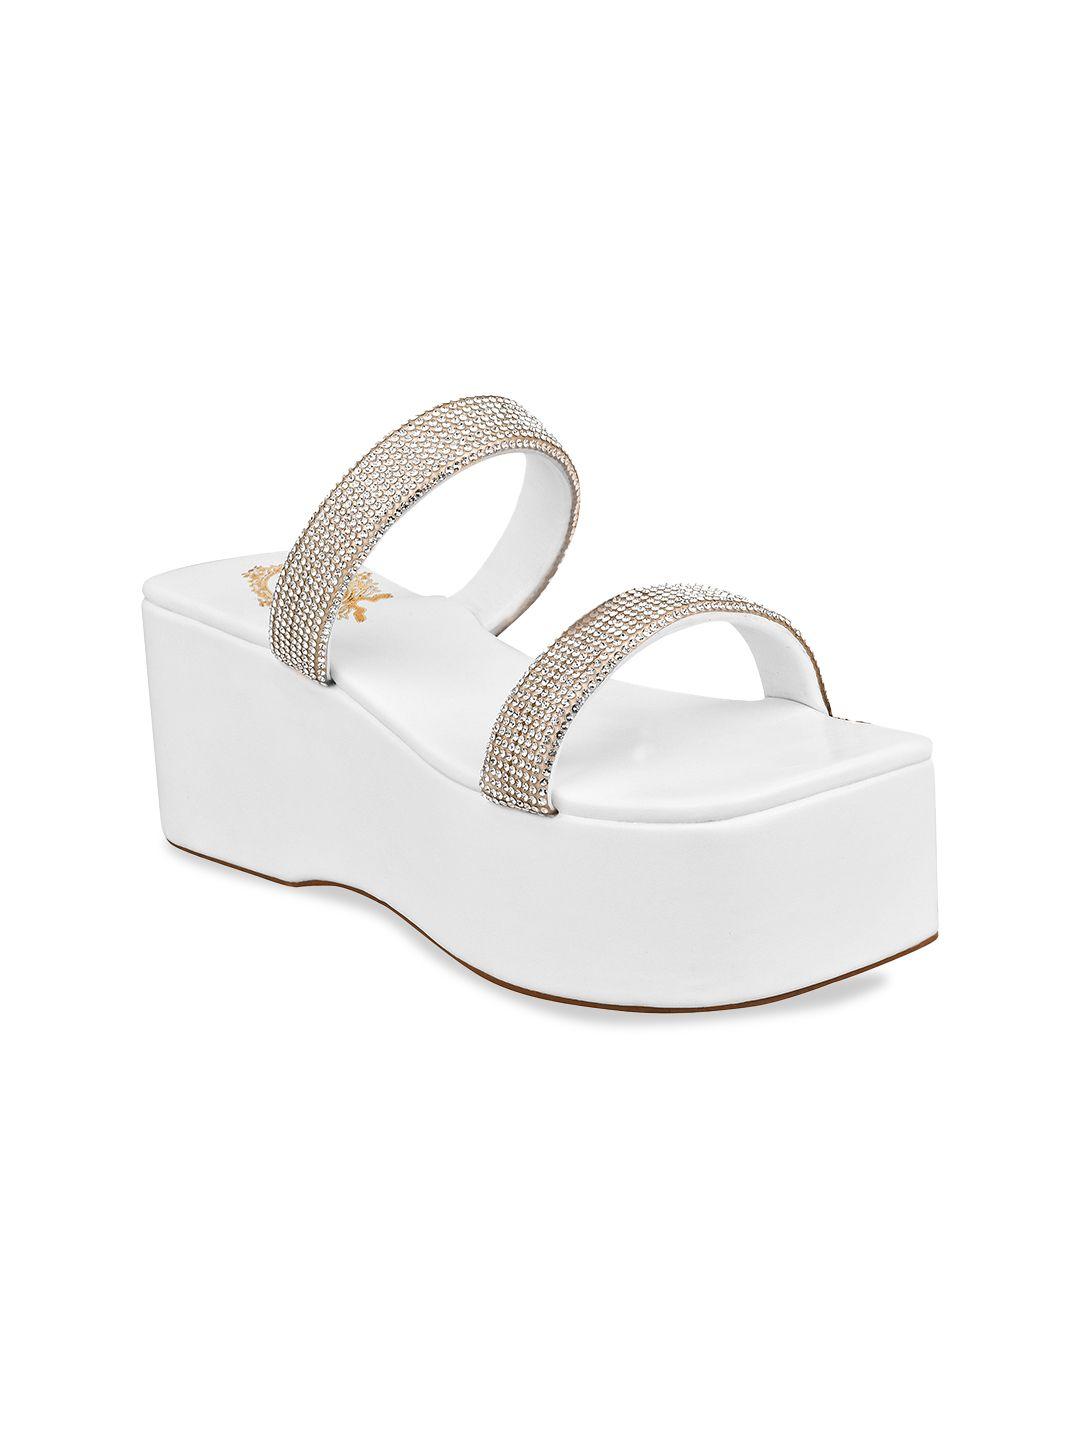 shoetopia white wedge heels